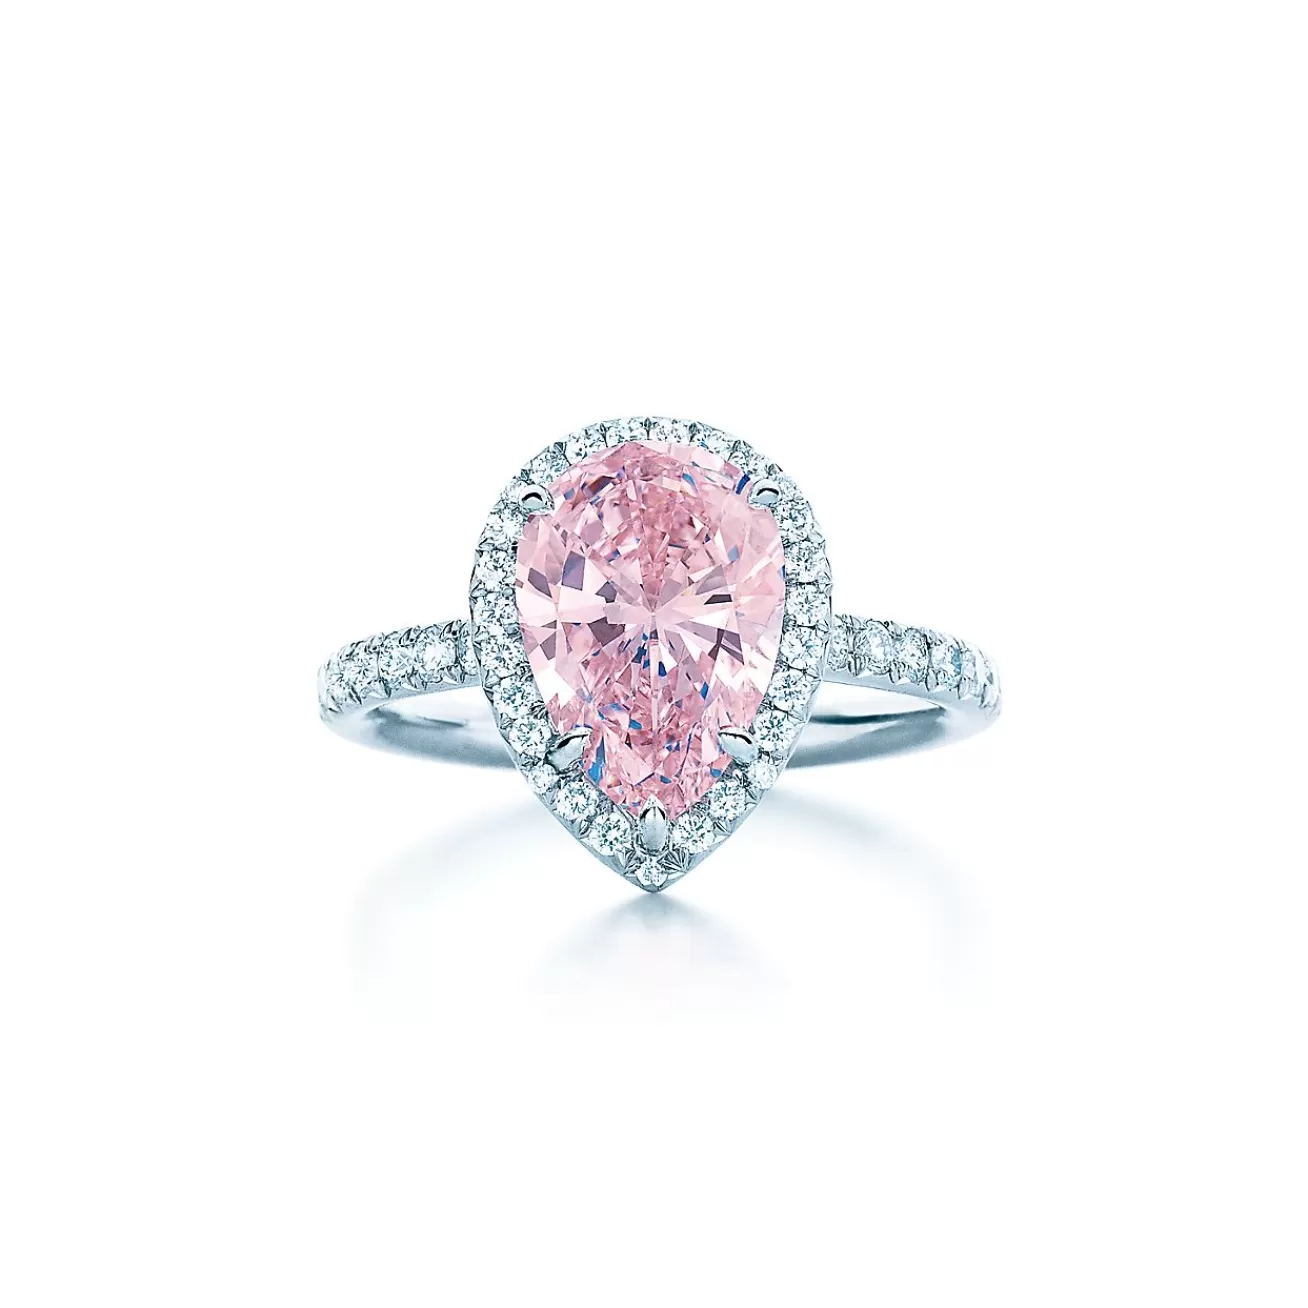 Tiffany & Co. Pear-shaped pink diamond ring in platinum with white diamonds. | ^ Platinum Jewelry | Diamond Jewelry